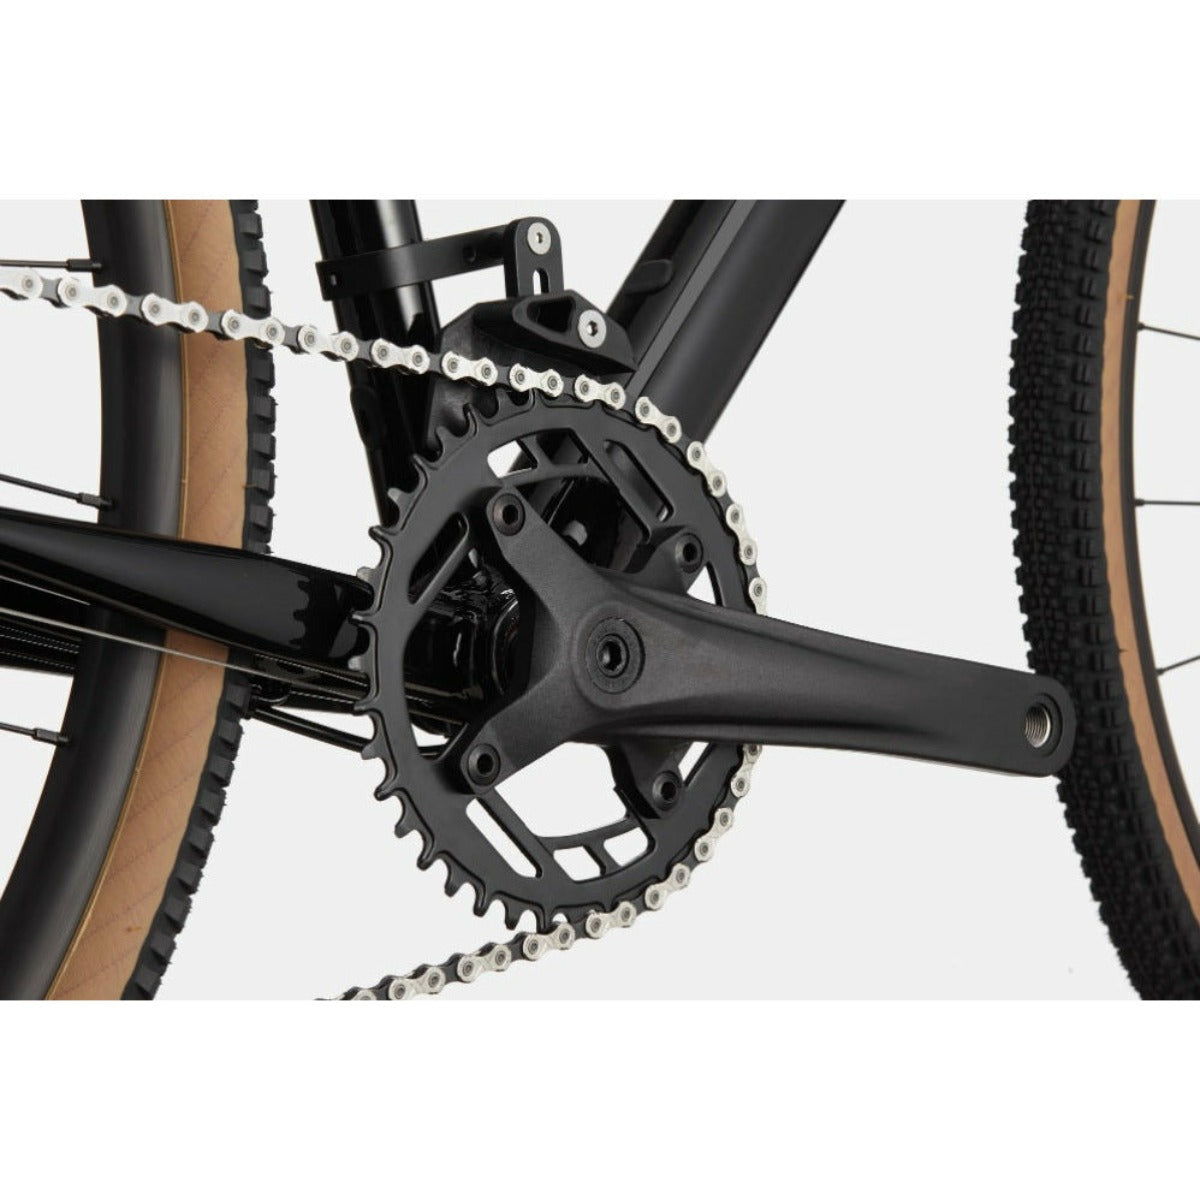 2022 Cannondale Topstone 4 w/ Carbon Fork Disc Gravel Bike